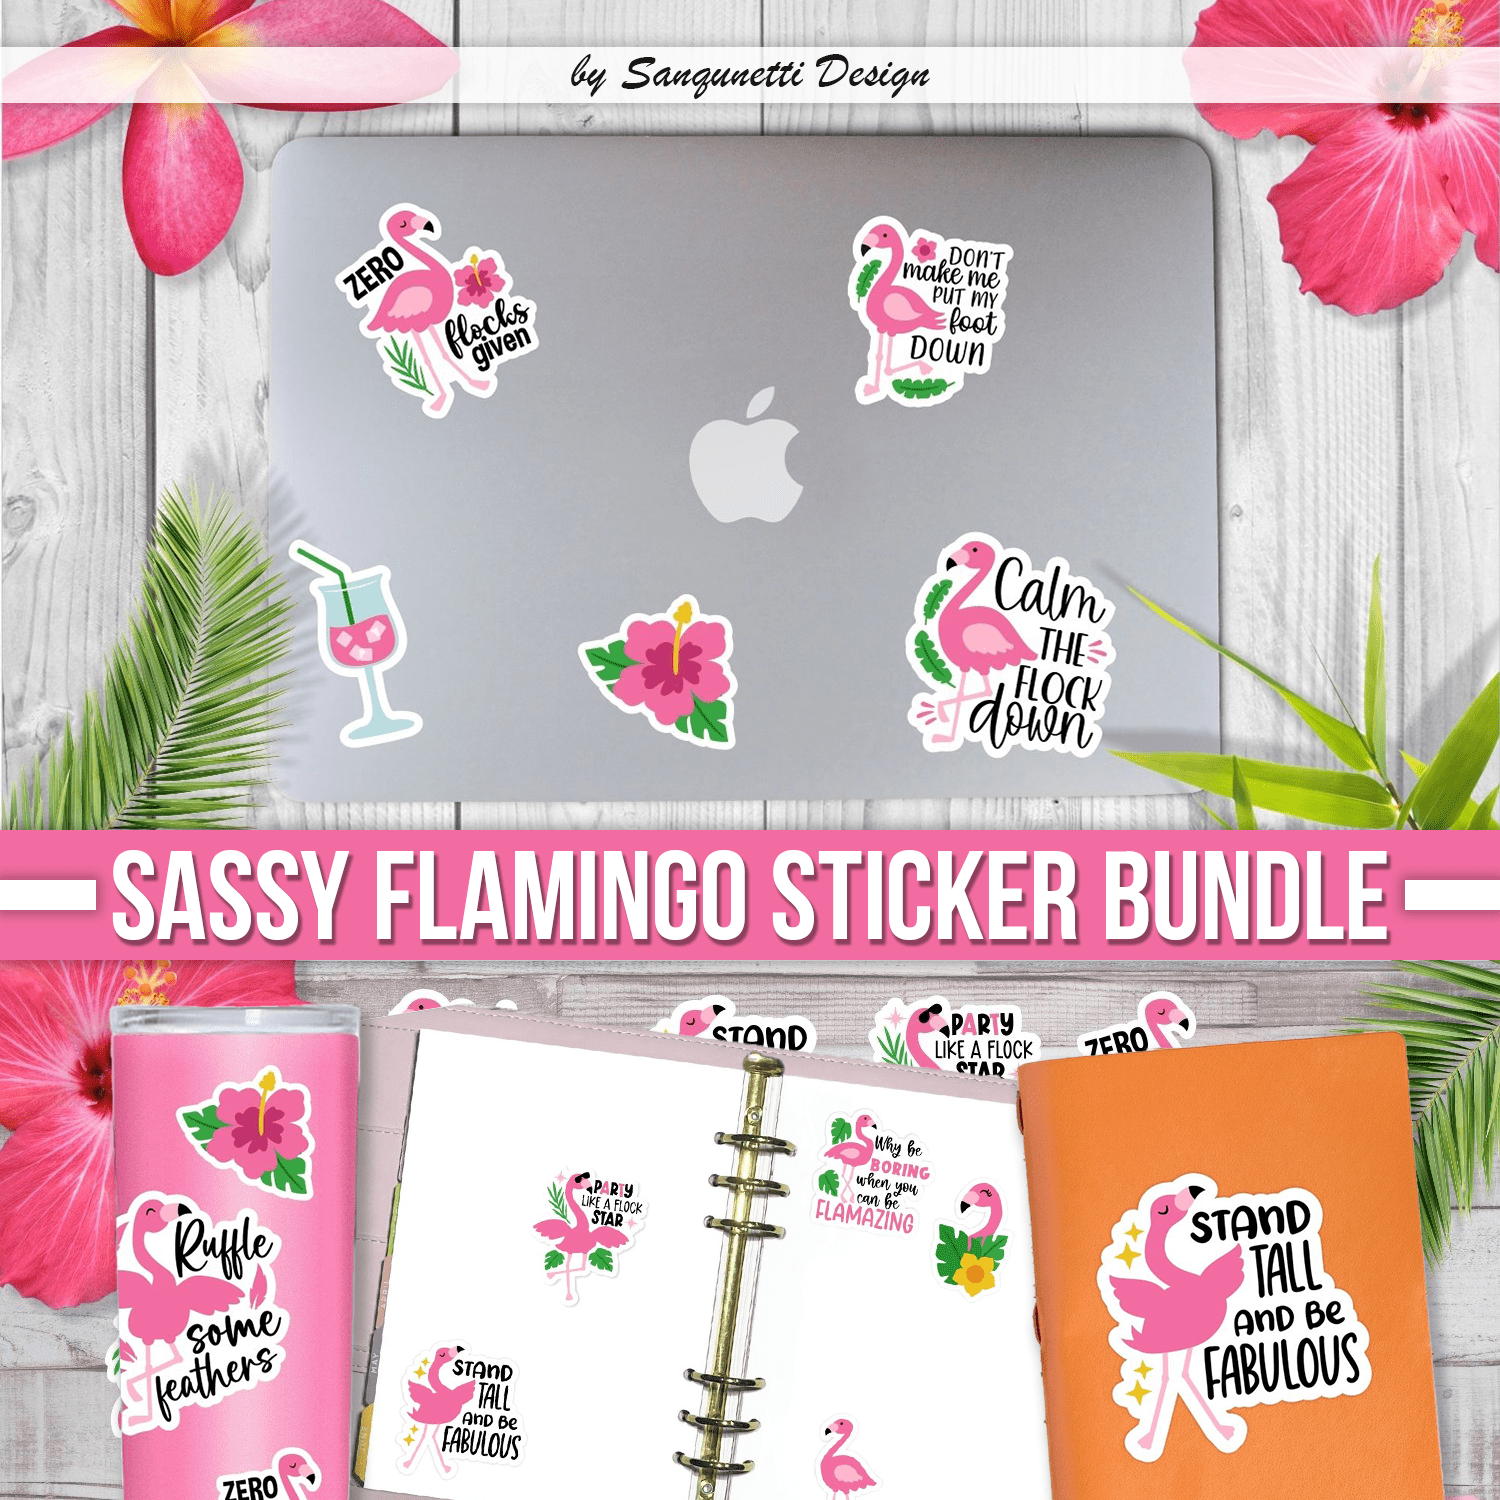 Sassy flamingo sticker bundle for your creative design.